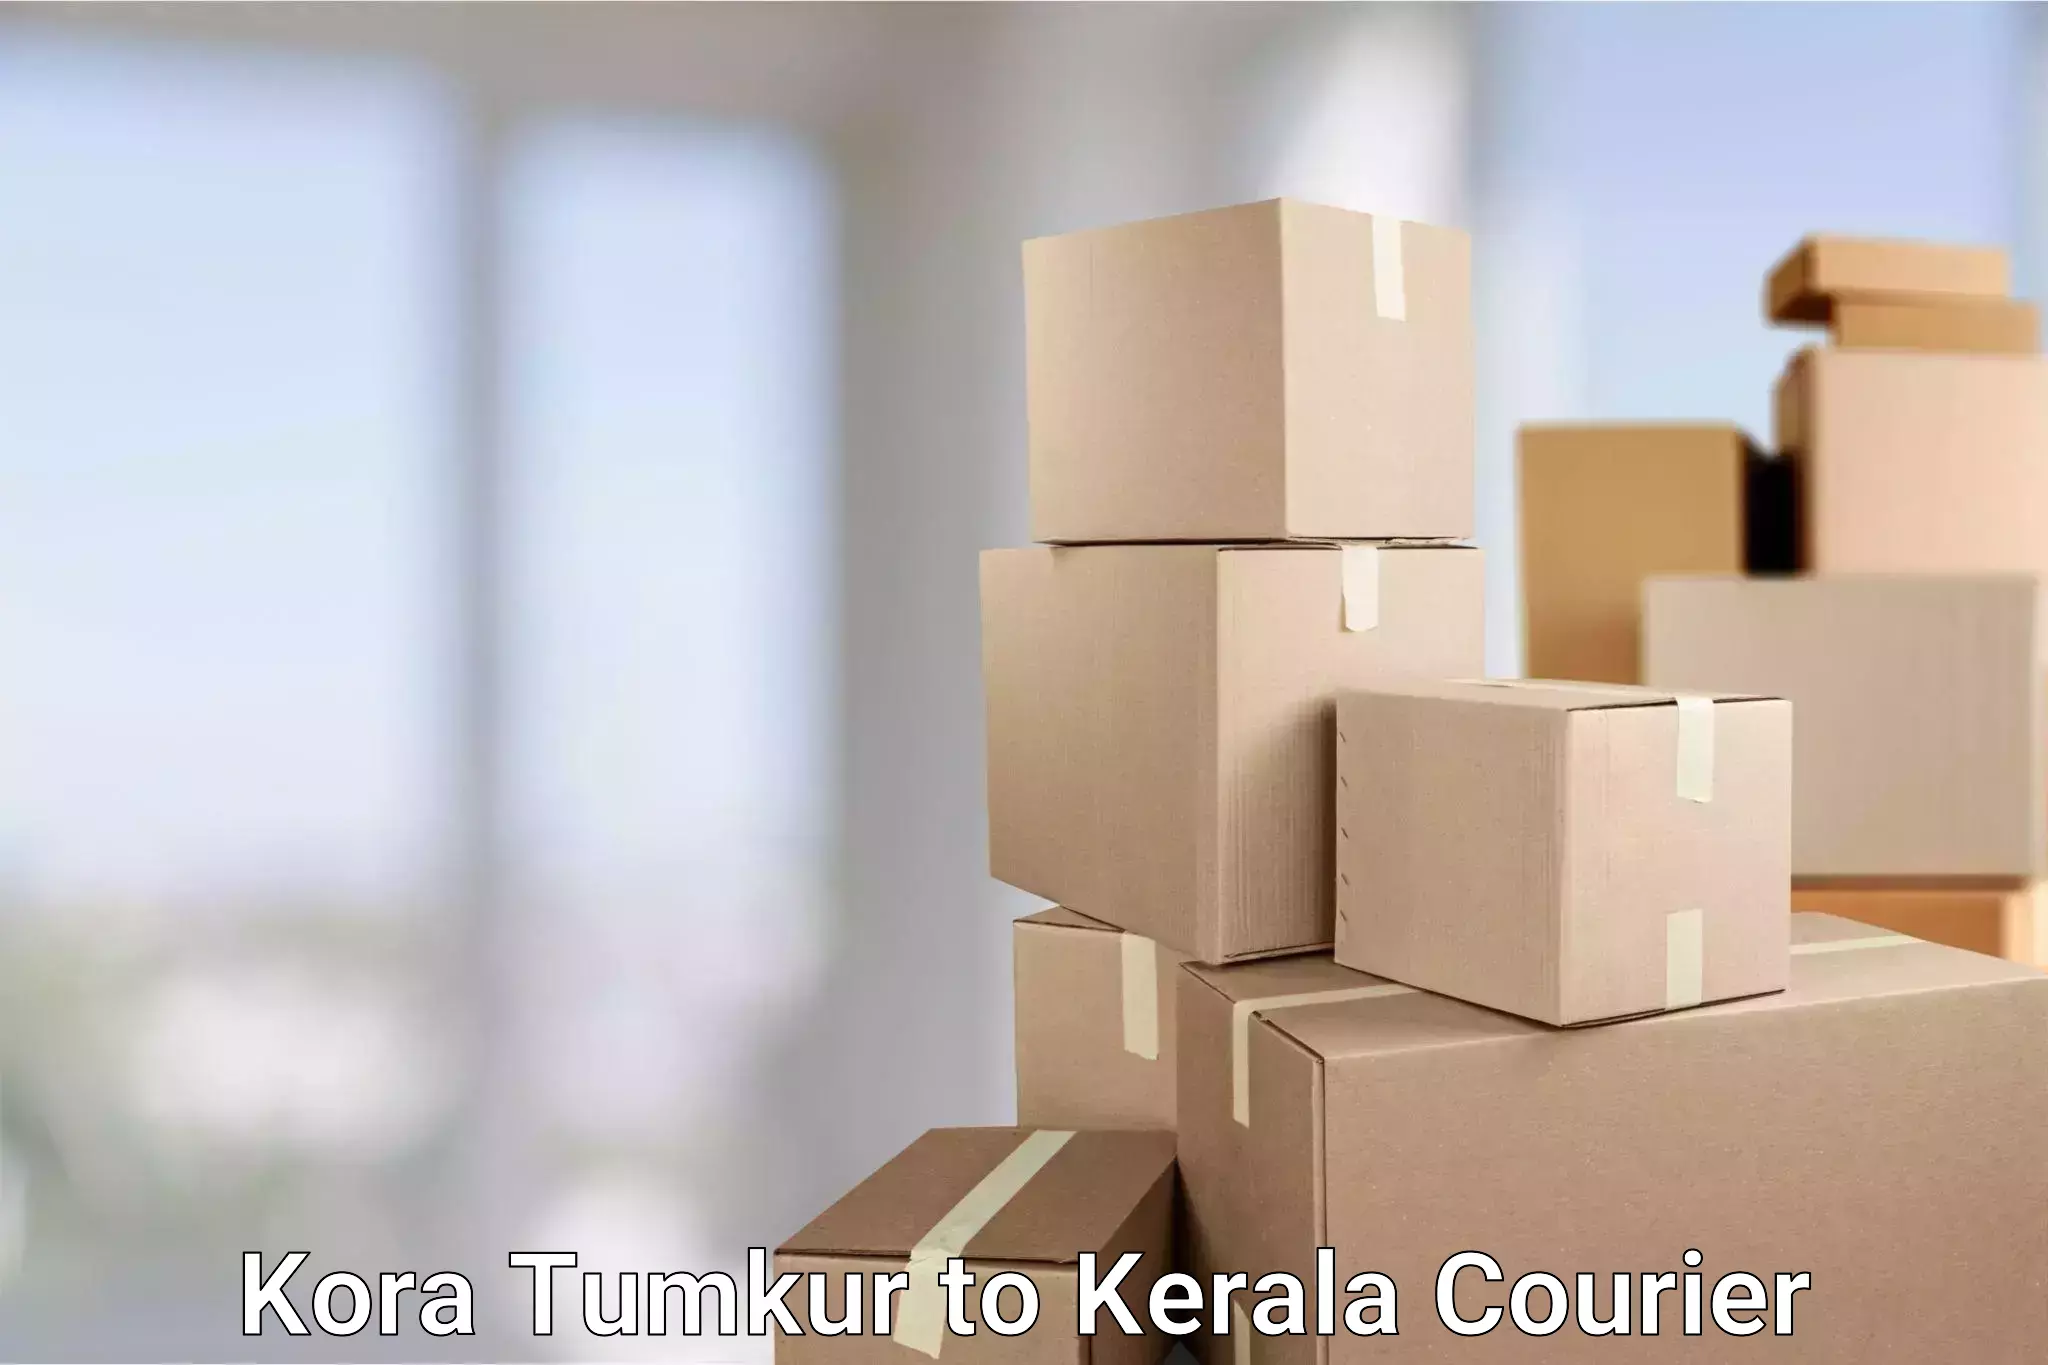 Courier service comparison Kora Tumkur to Kuchi